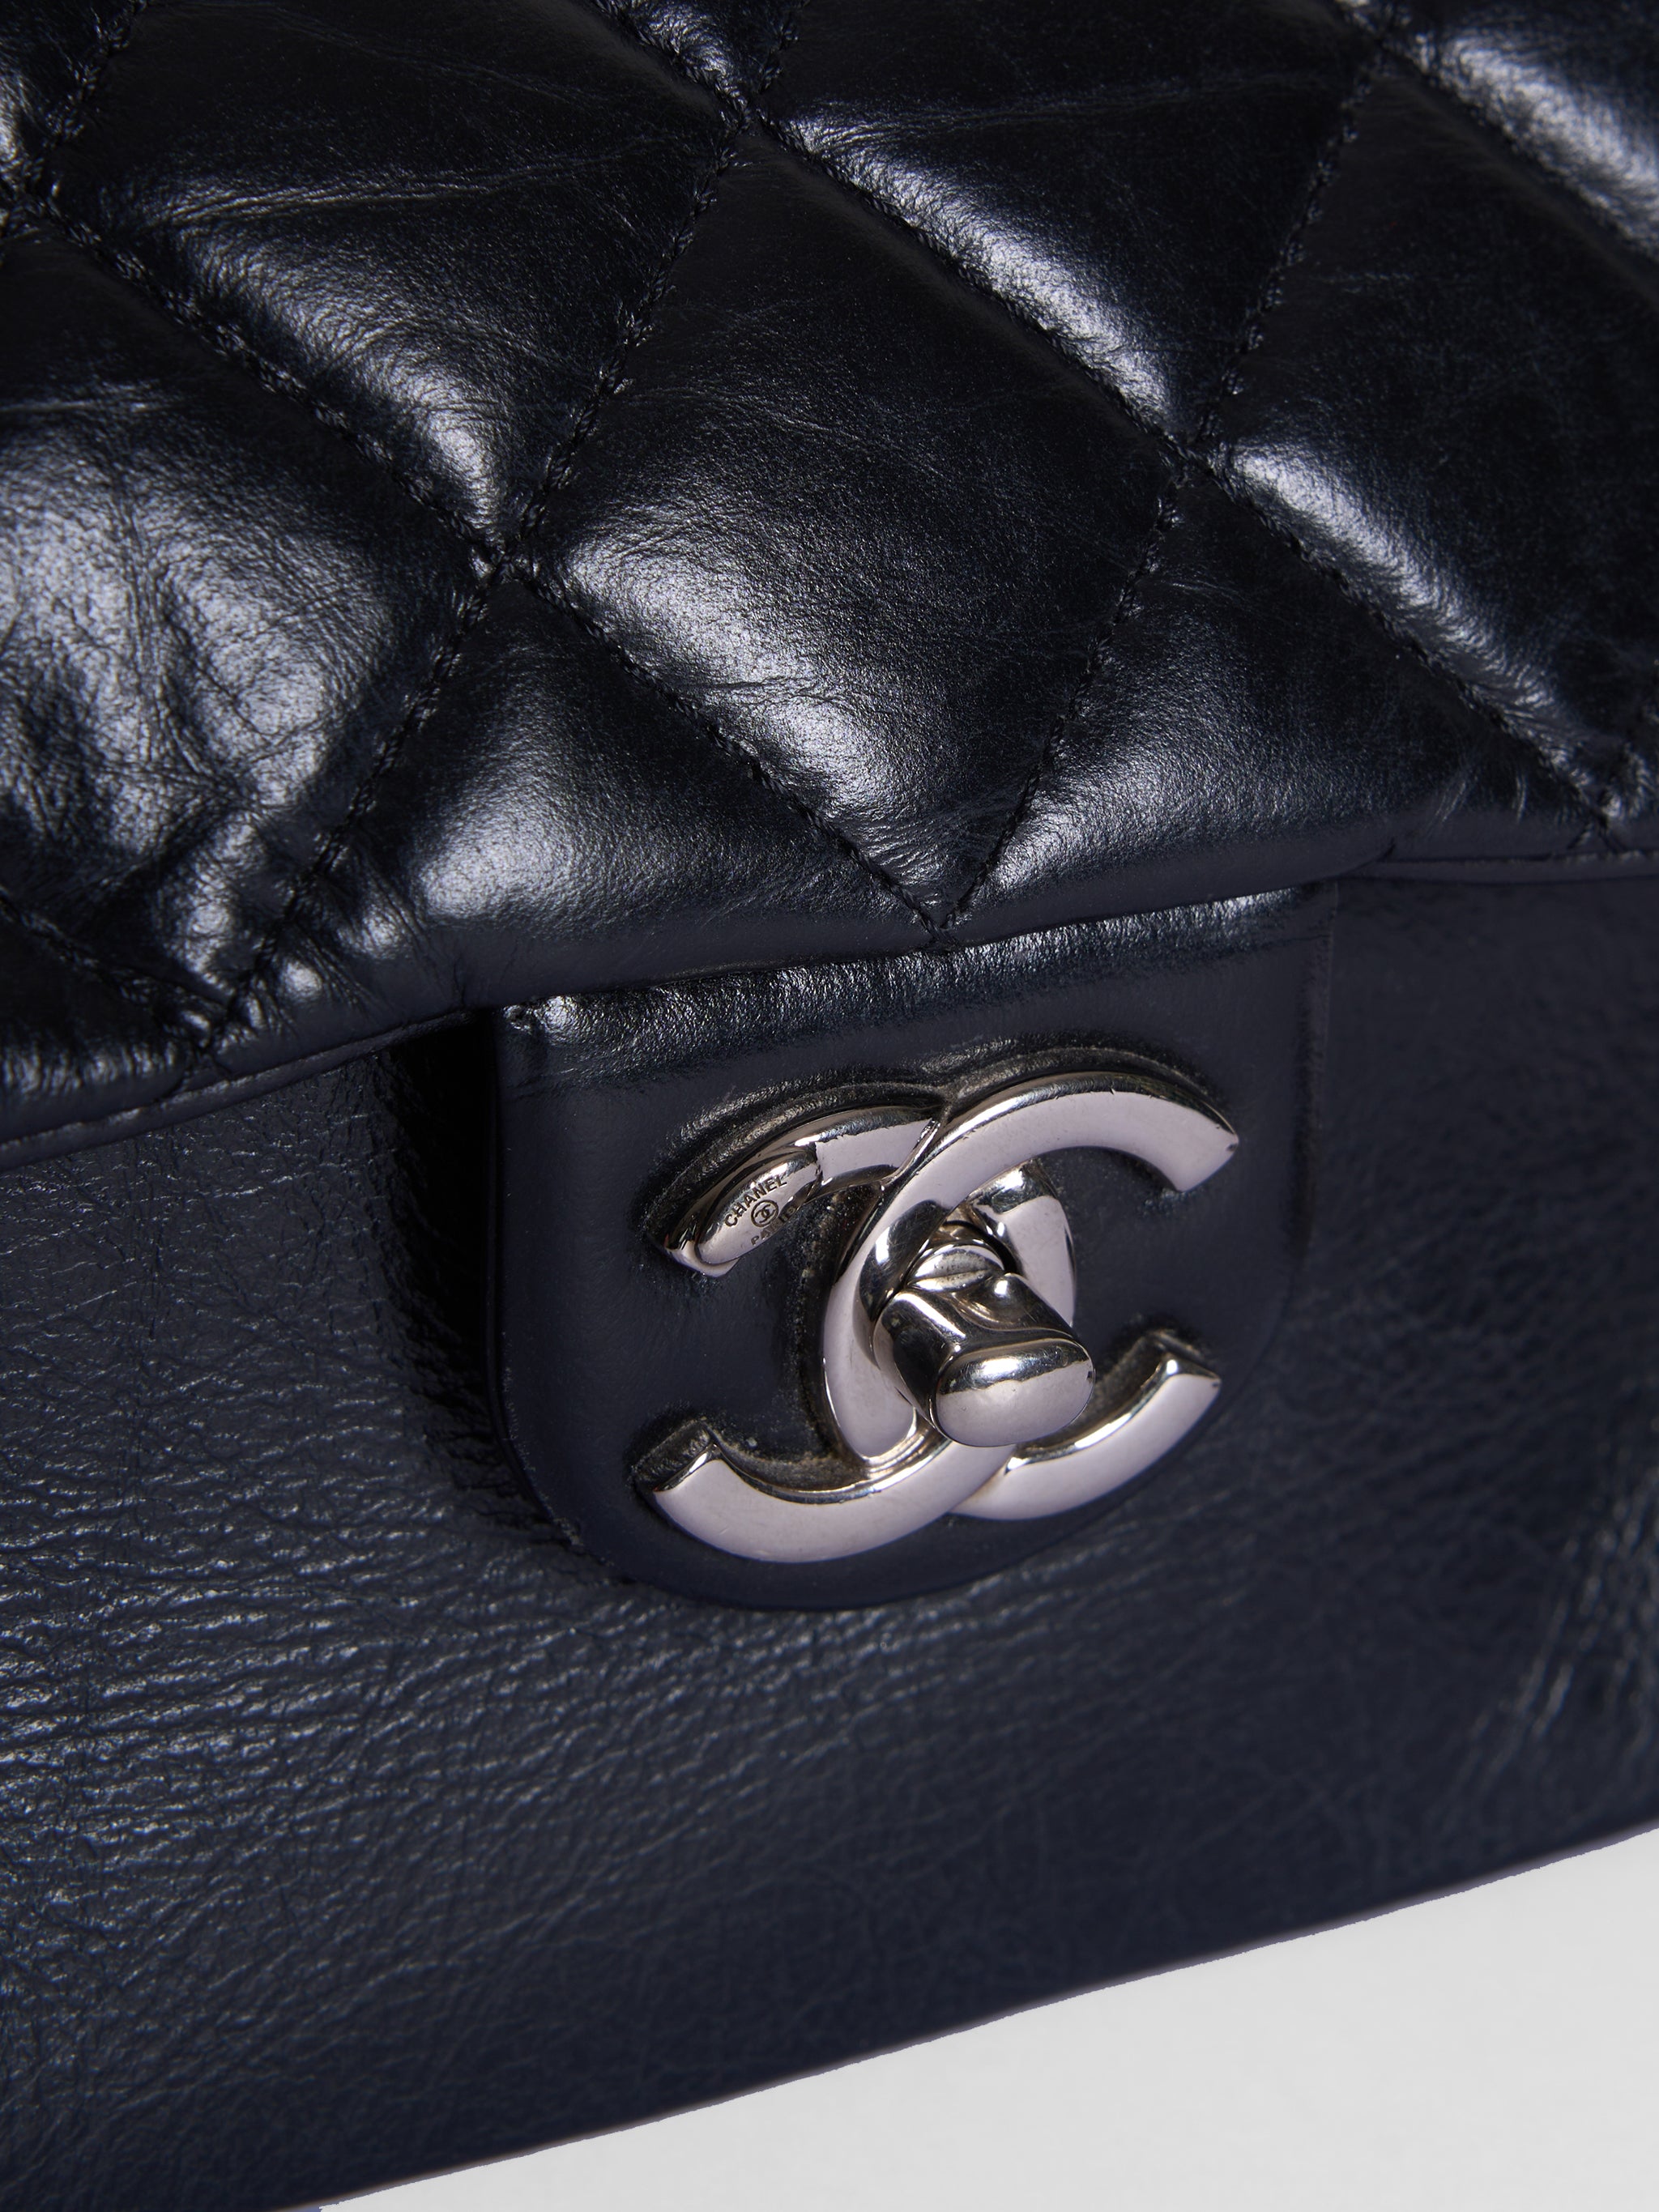 Chanel Timeless Classique Small Crossbody Black Bag